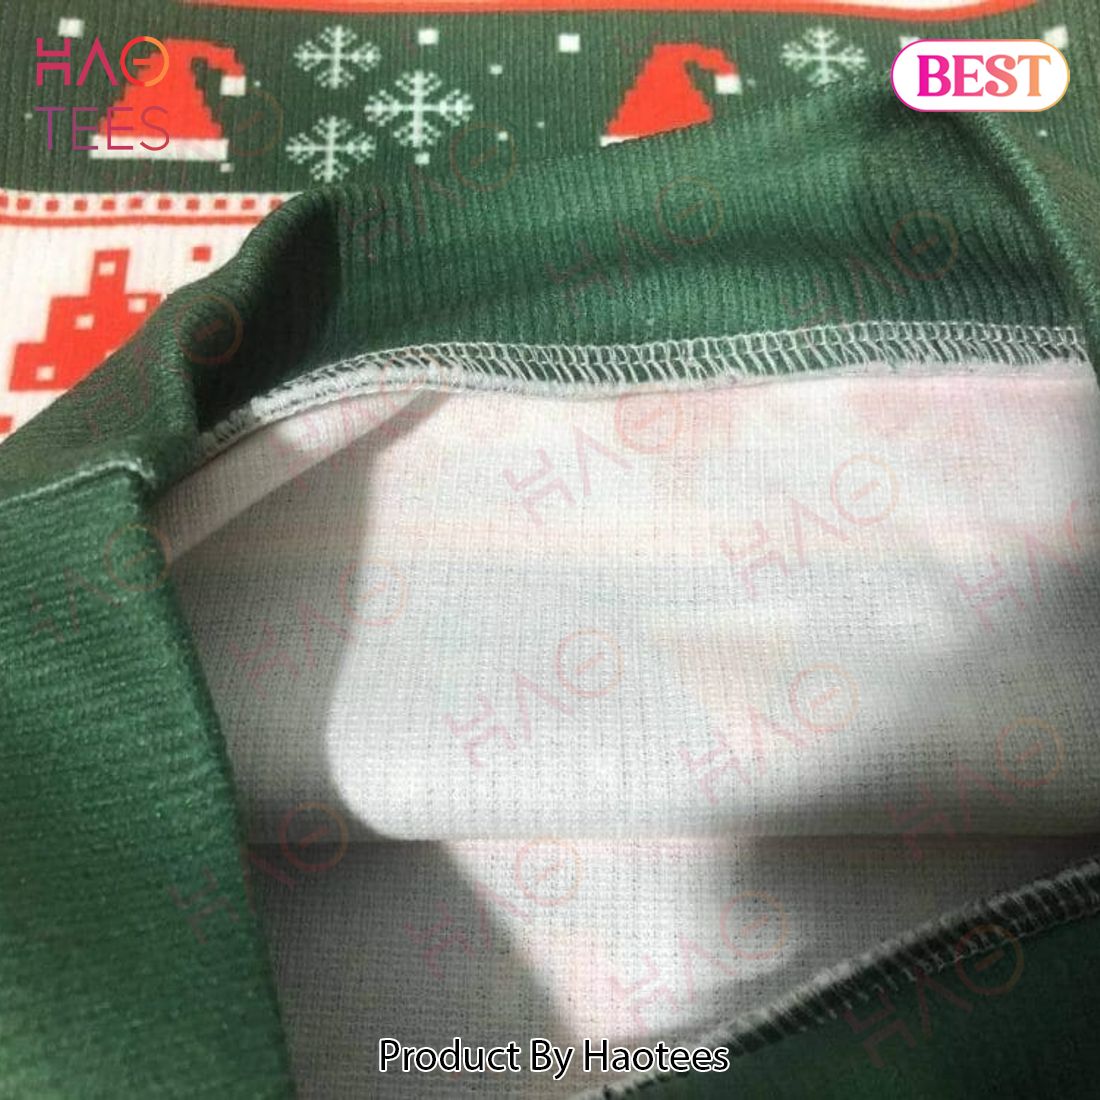 Gundam Anime Ugly Christmas Sweater Custom Santa Xmas Gift